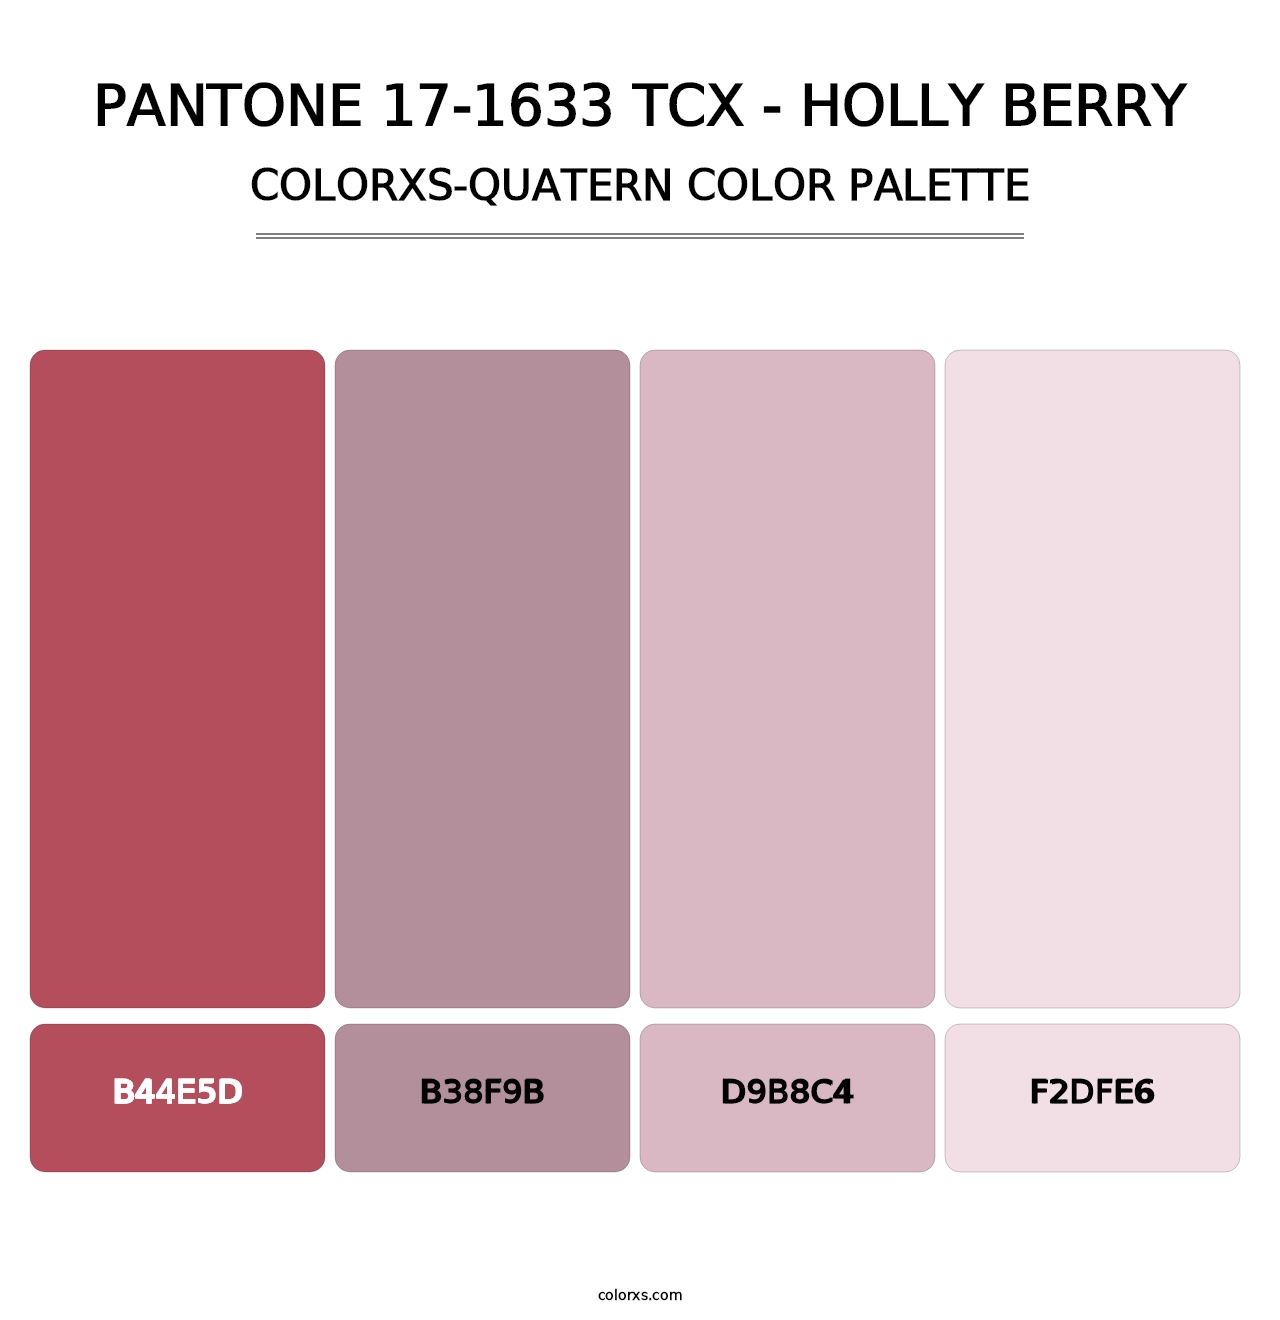 PANTONE 17-1633 TCX - Holly Berry - Colorxs Quatern Palette